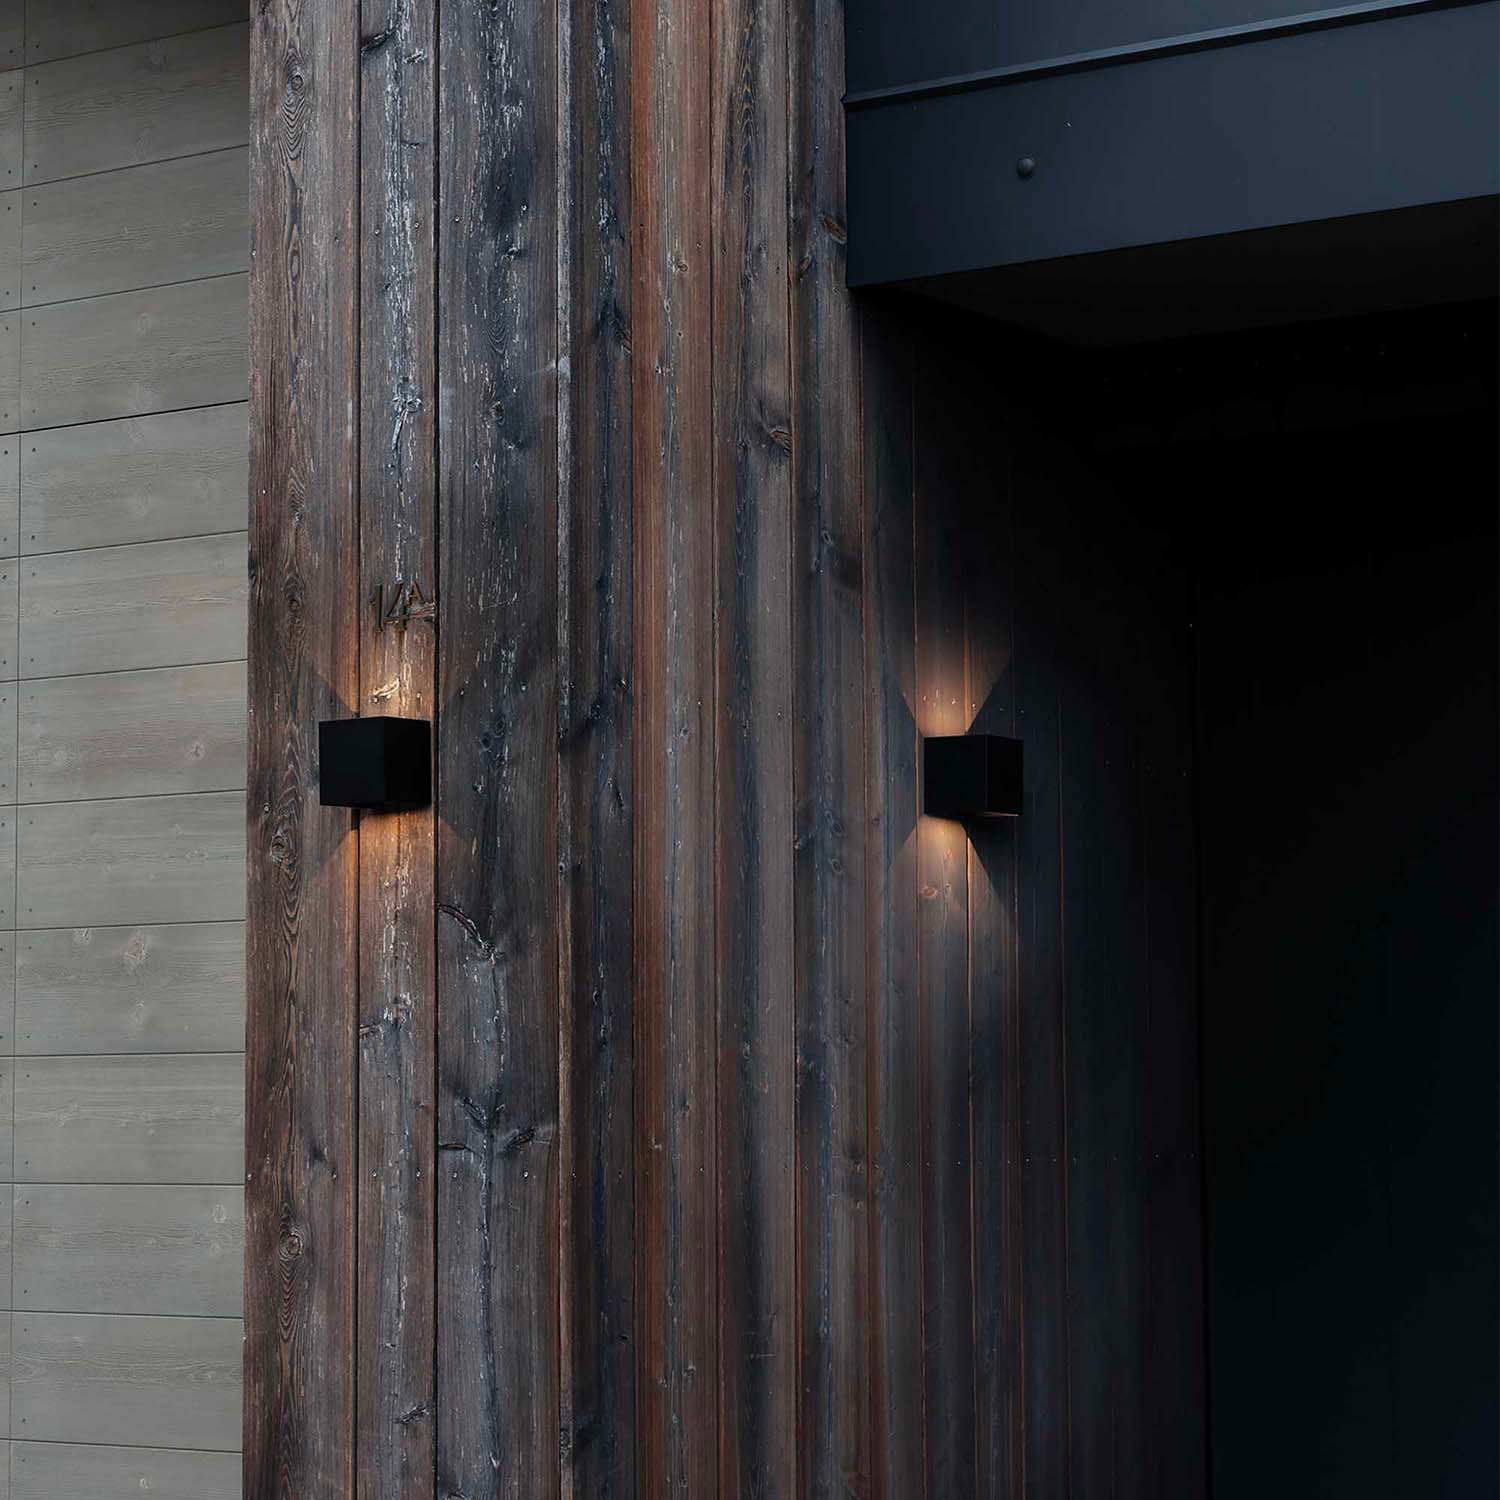 ATOM - Designer and modern outdoor wall light, square or rectangular